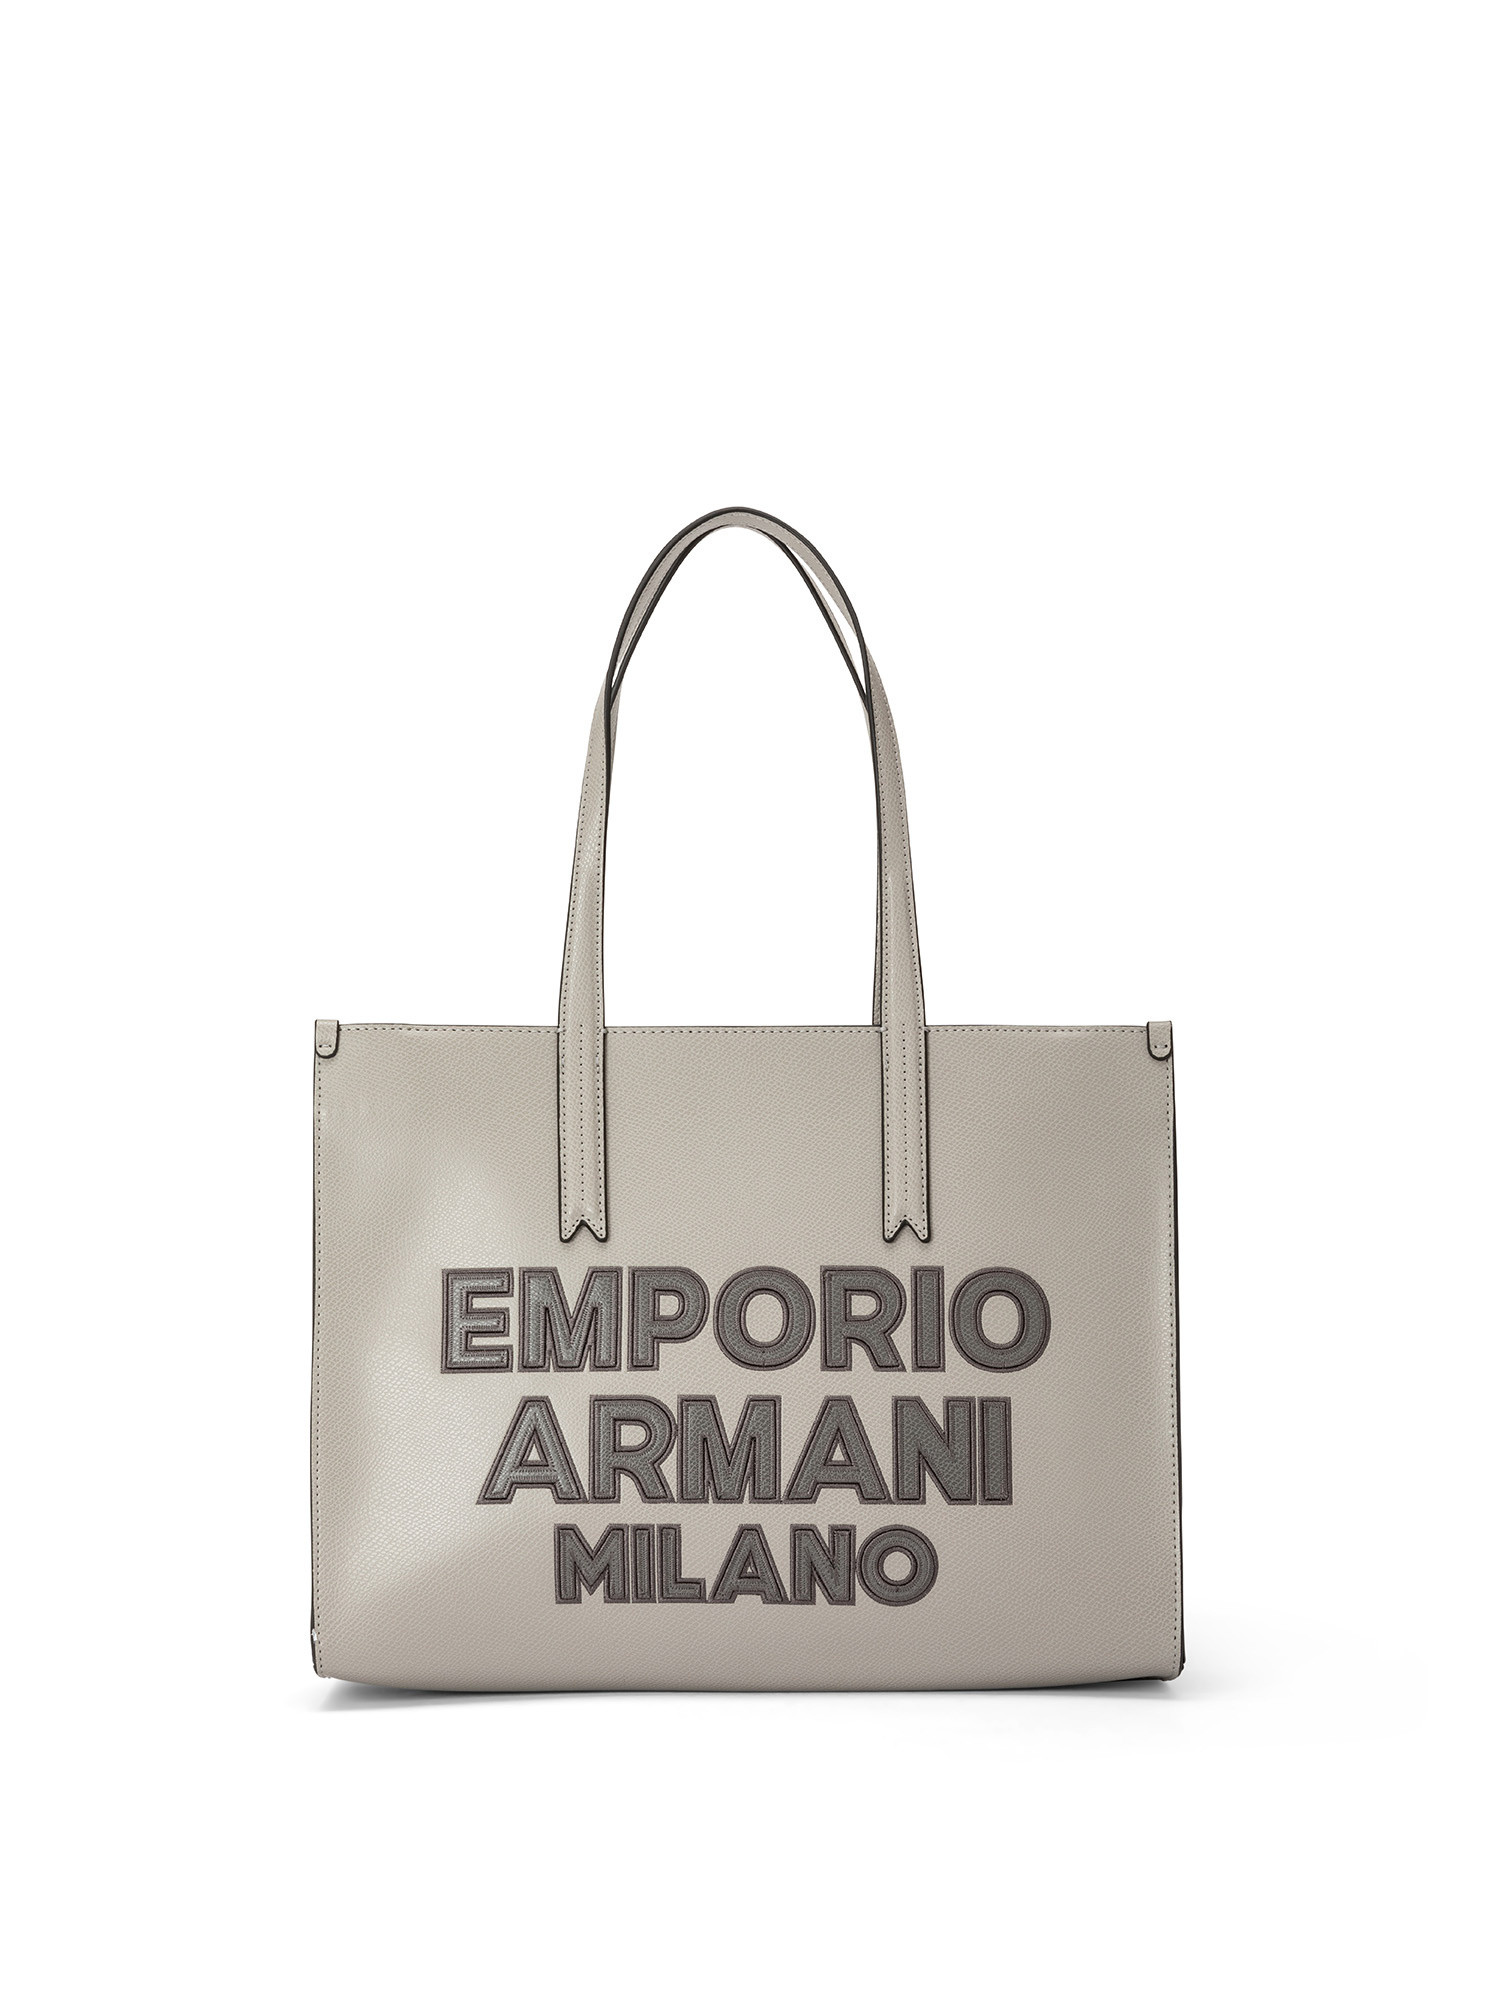 Emporio Armani - Borsa con ricamo logo, Grigio, large image number 0